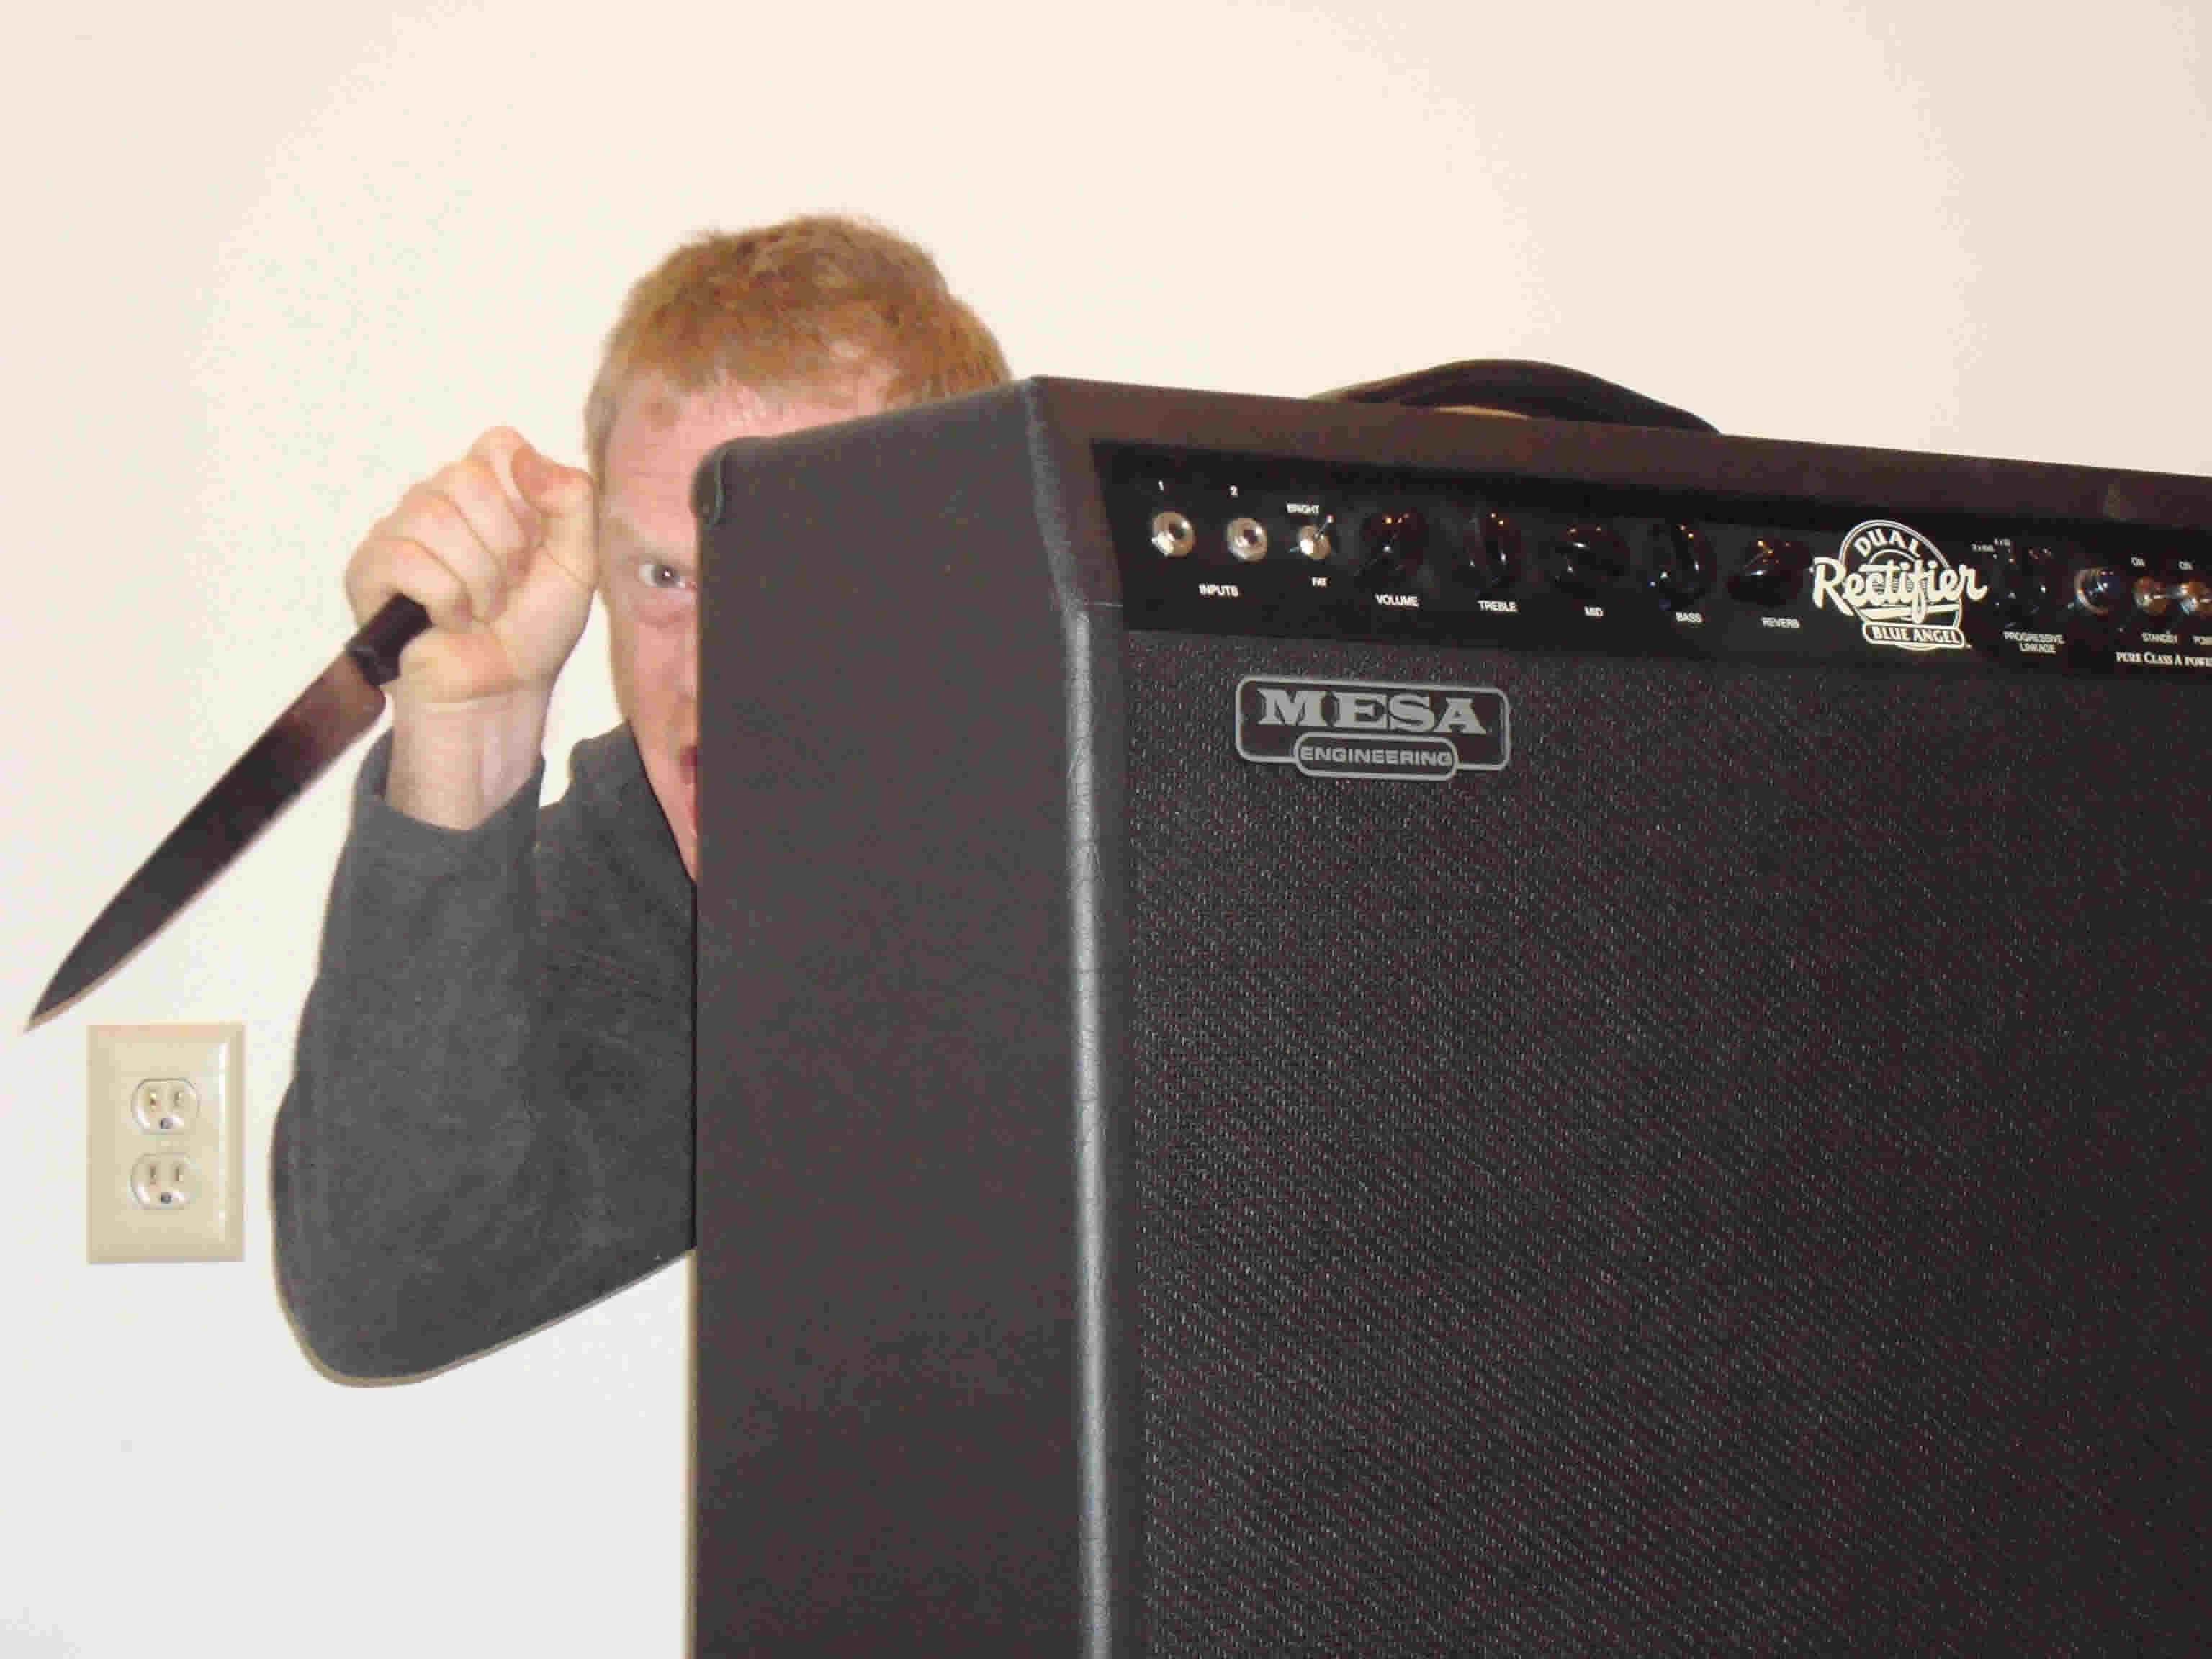 The Amplifier Prank